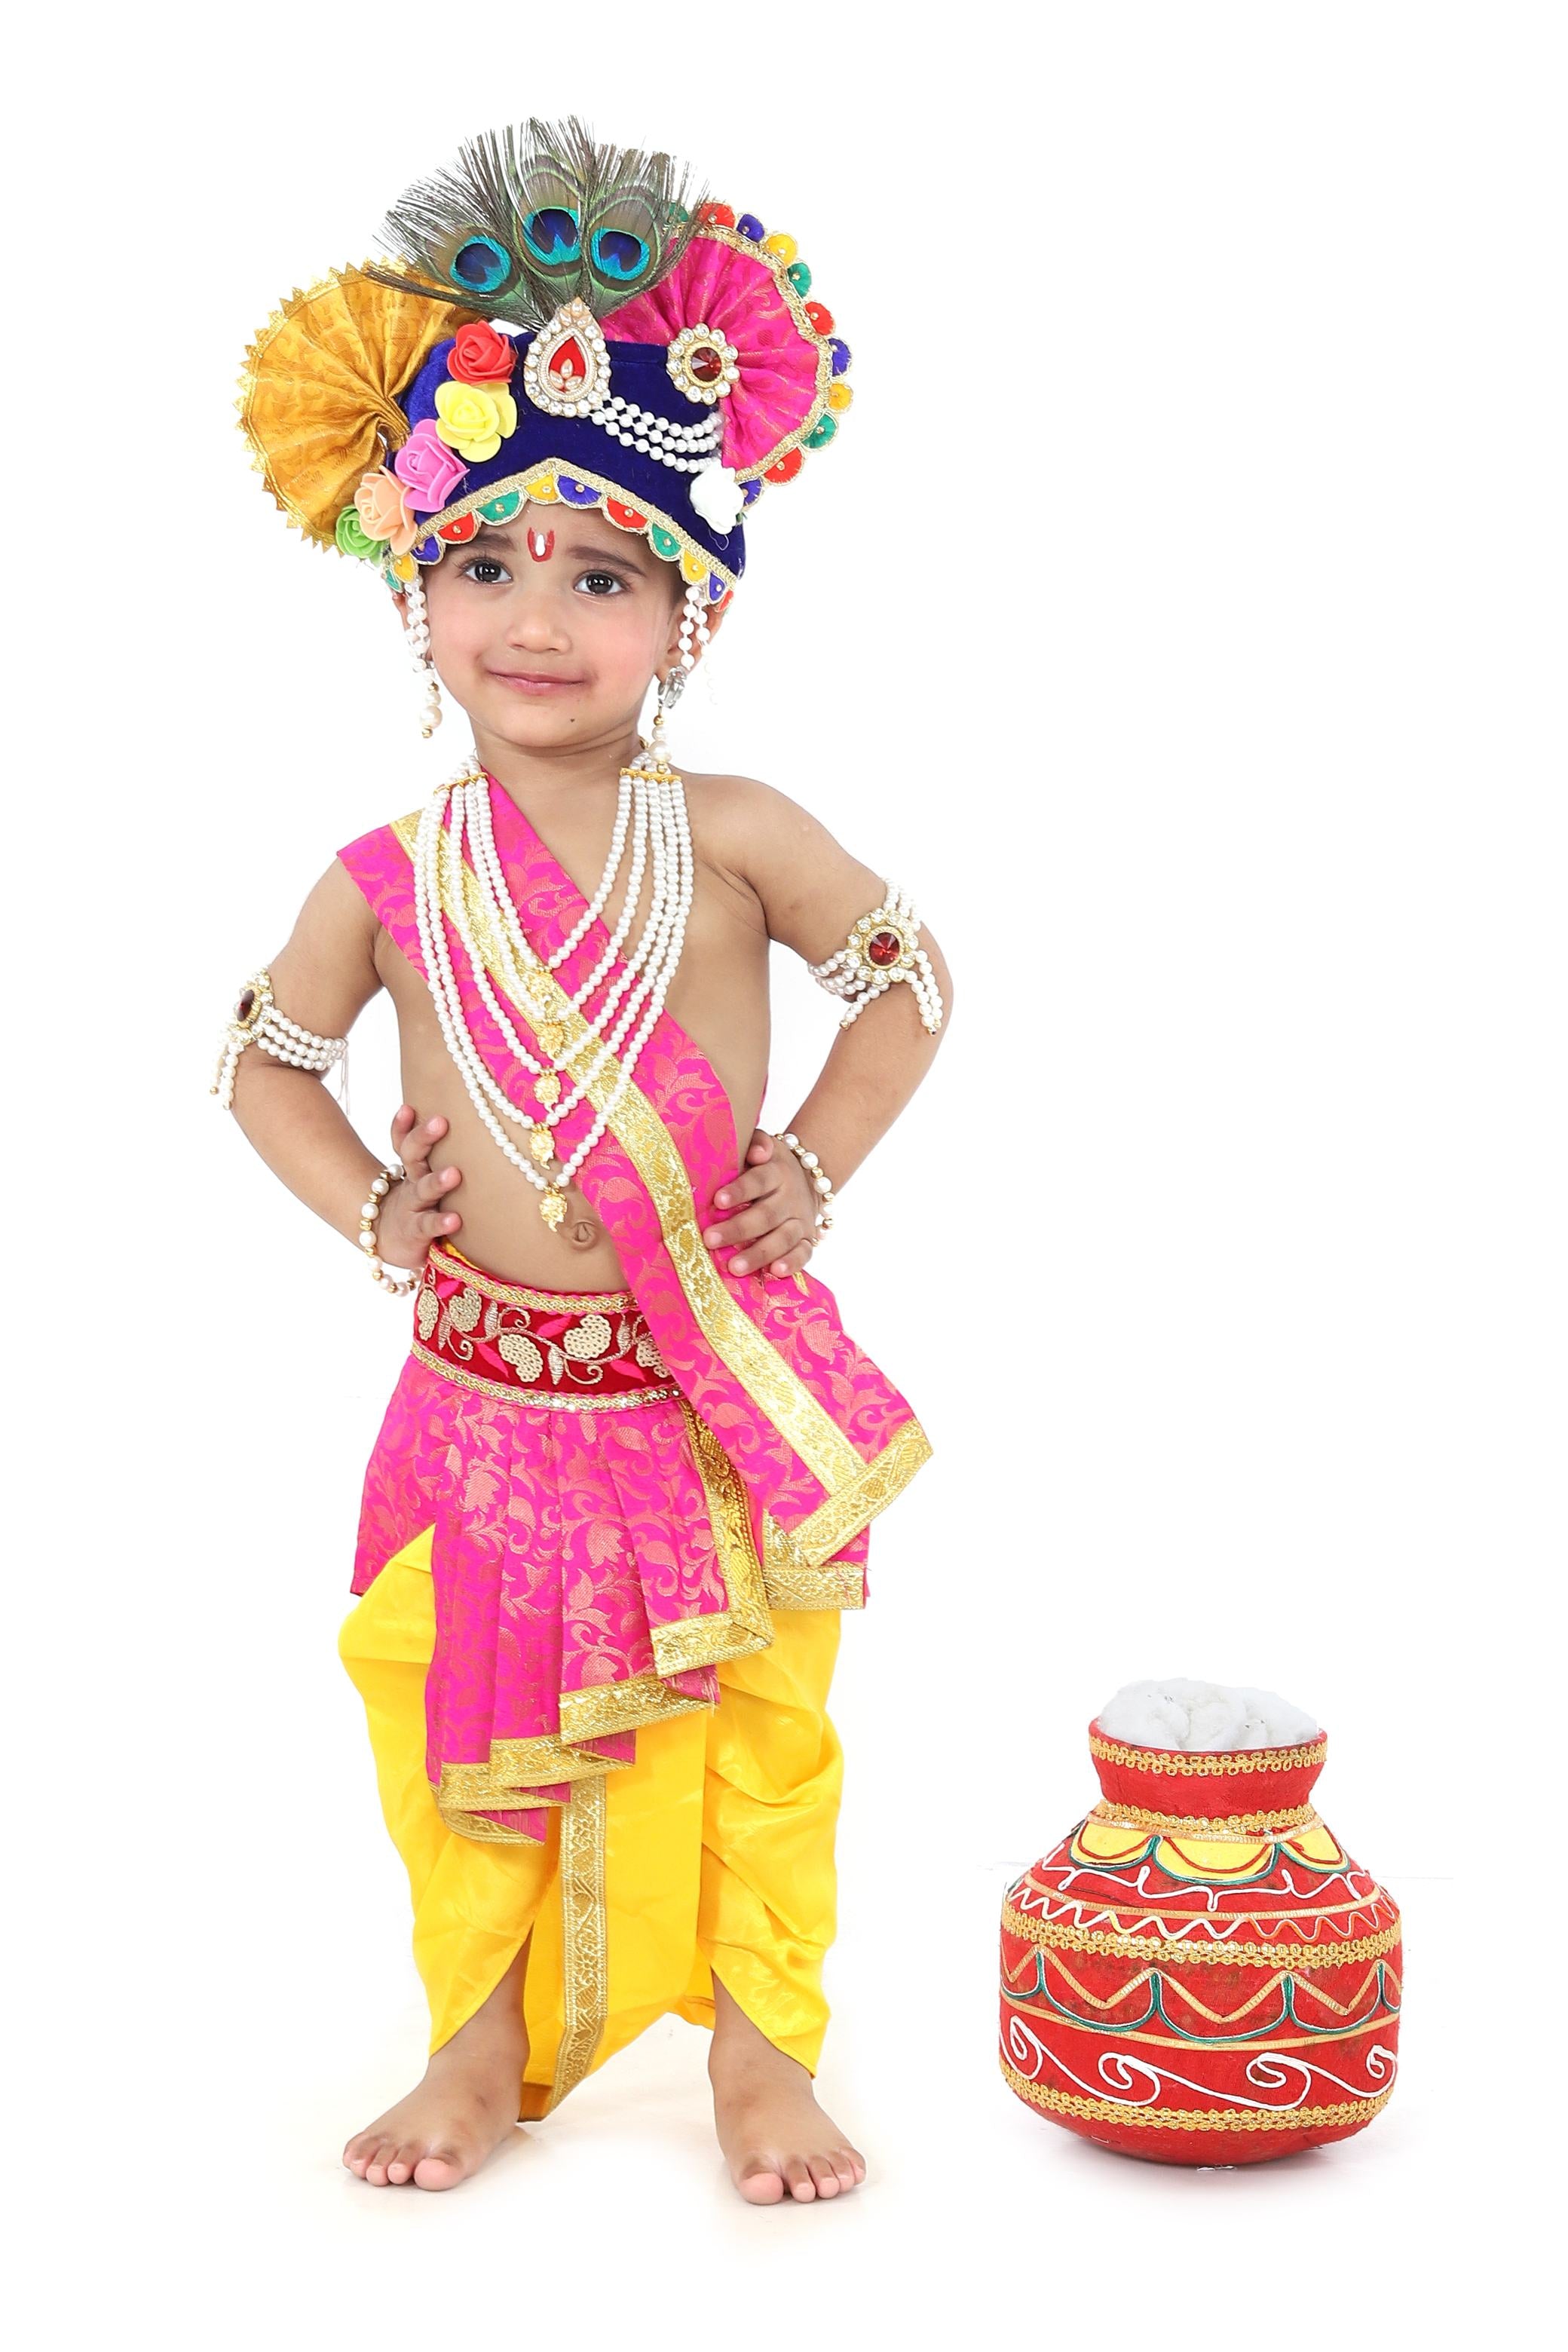 Image of Radha krishna pink dress-PF748489-Picxy